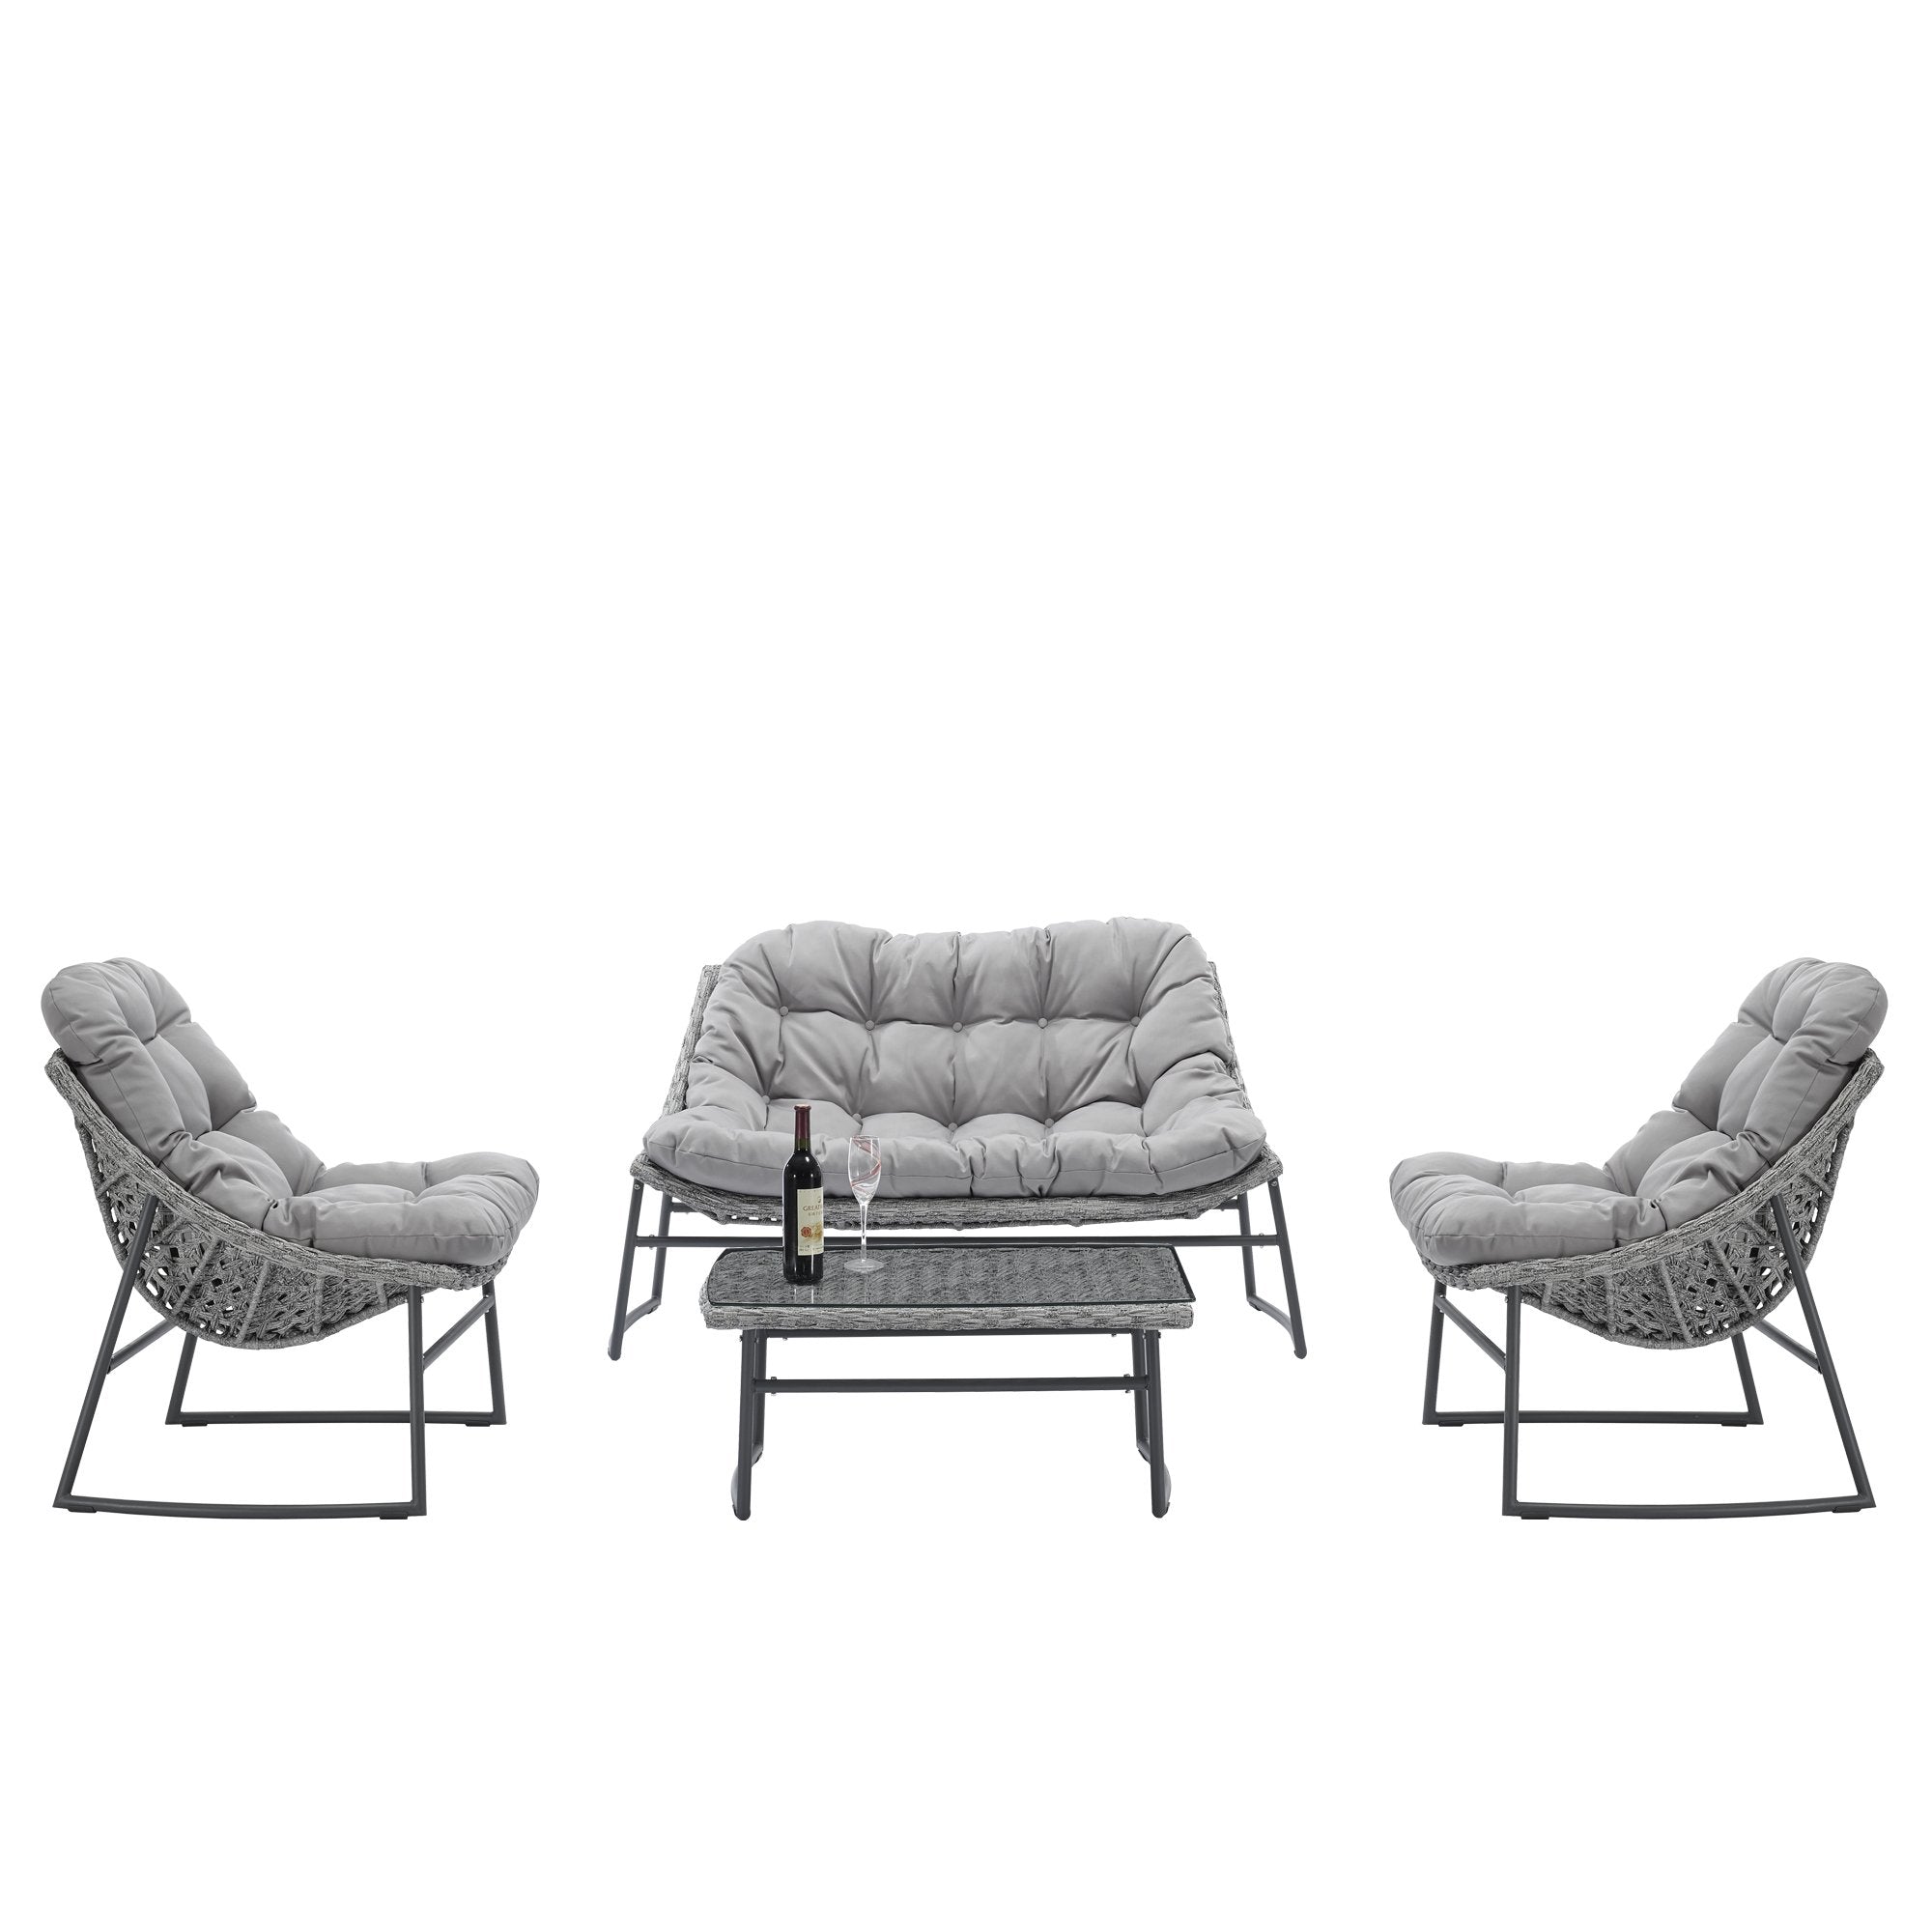 Classic Rattan Sofa Set Outdoor Patio Furniture 4 PCS(1 loveseat sofa + 2 single sofas + 1 table)